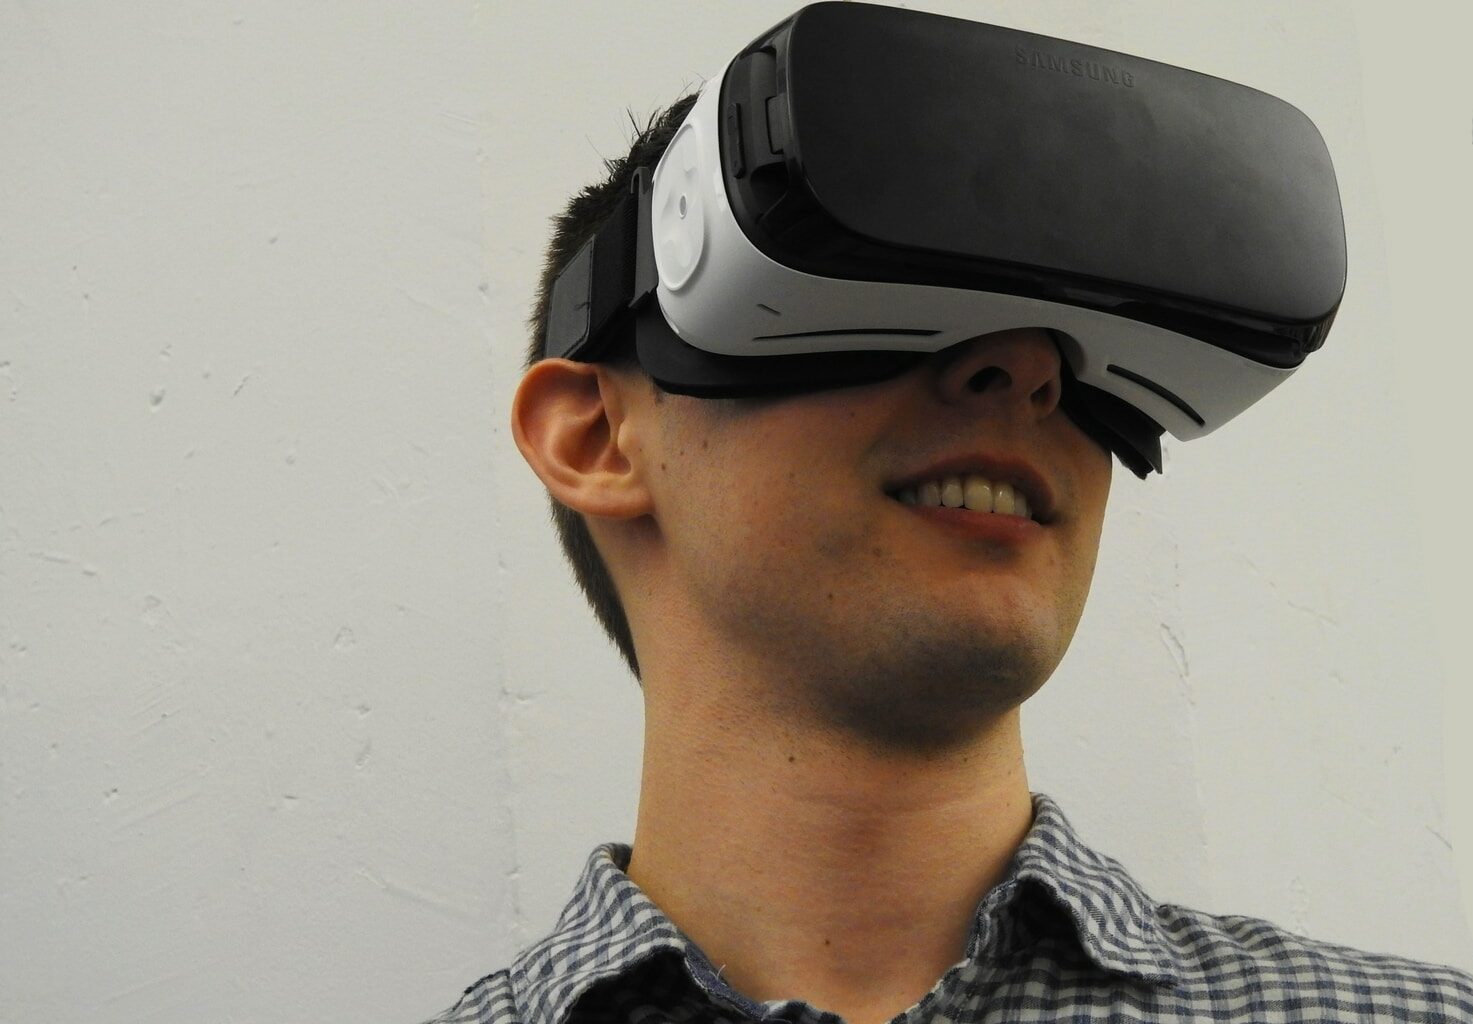 man wearing VR glass headset